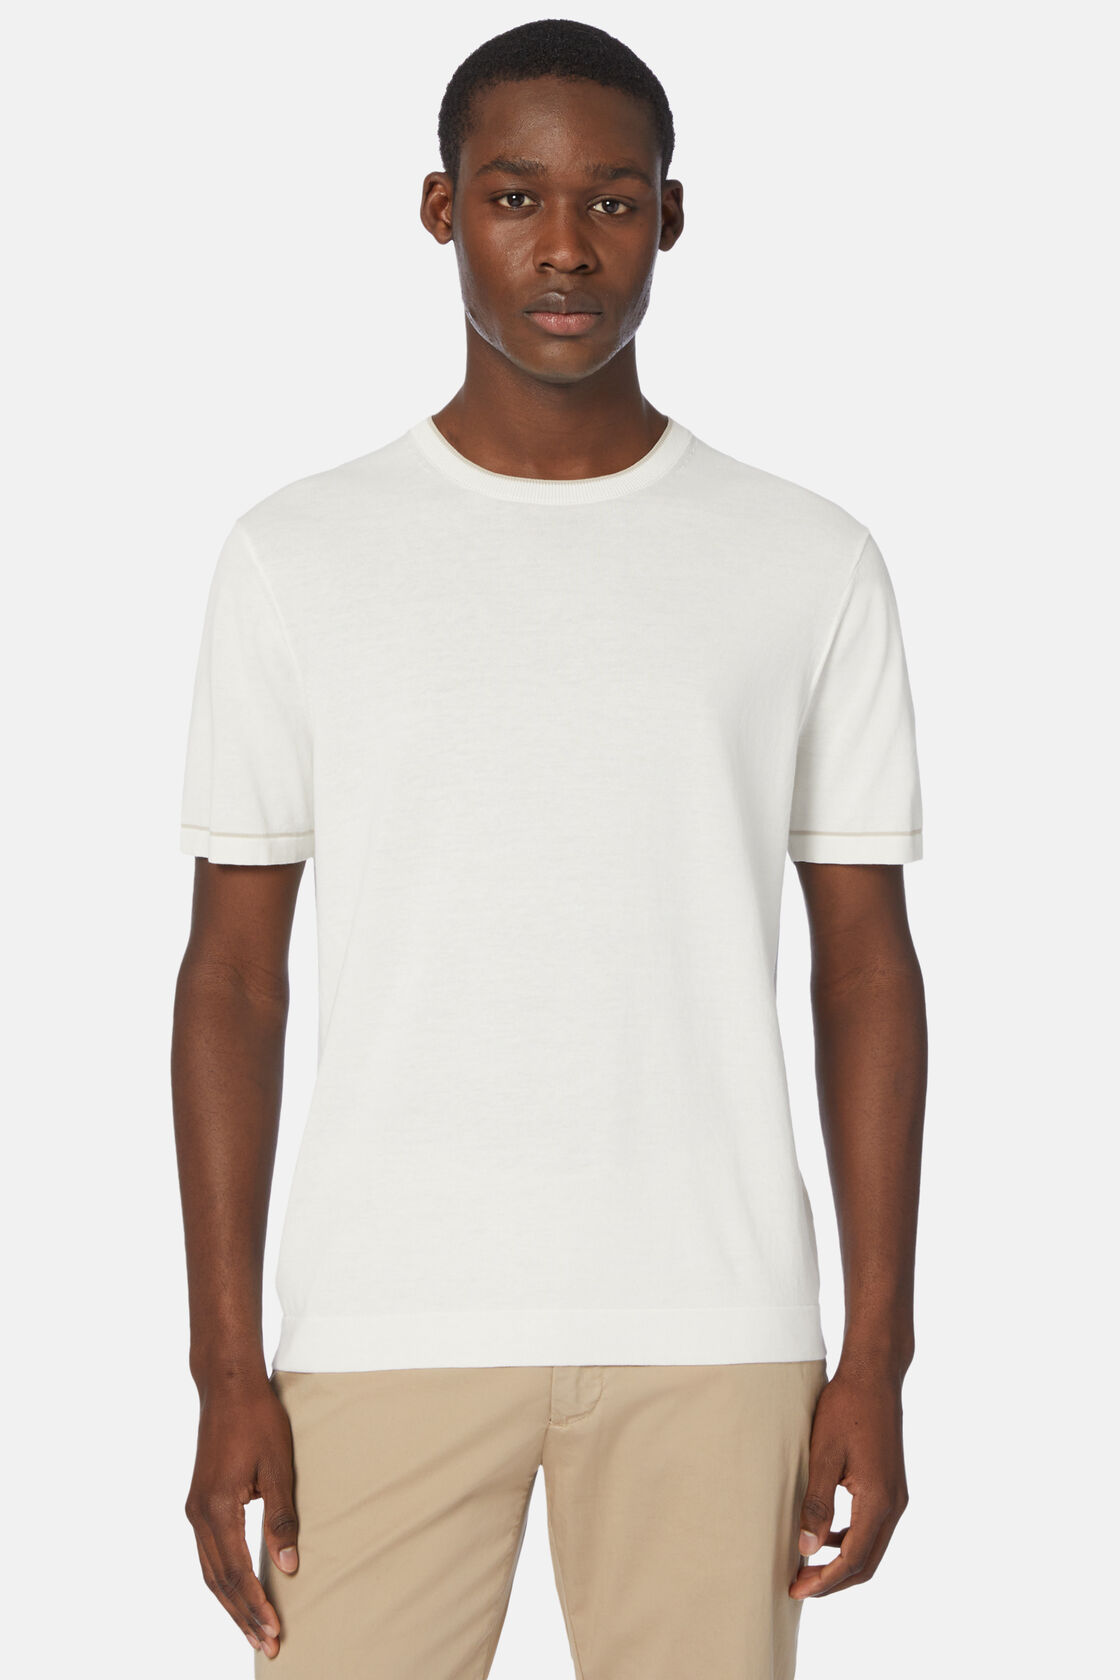 White Cotton Crepe Knit T-shirt, White, hi-res